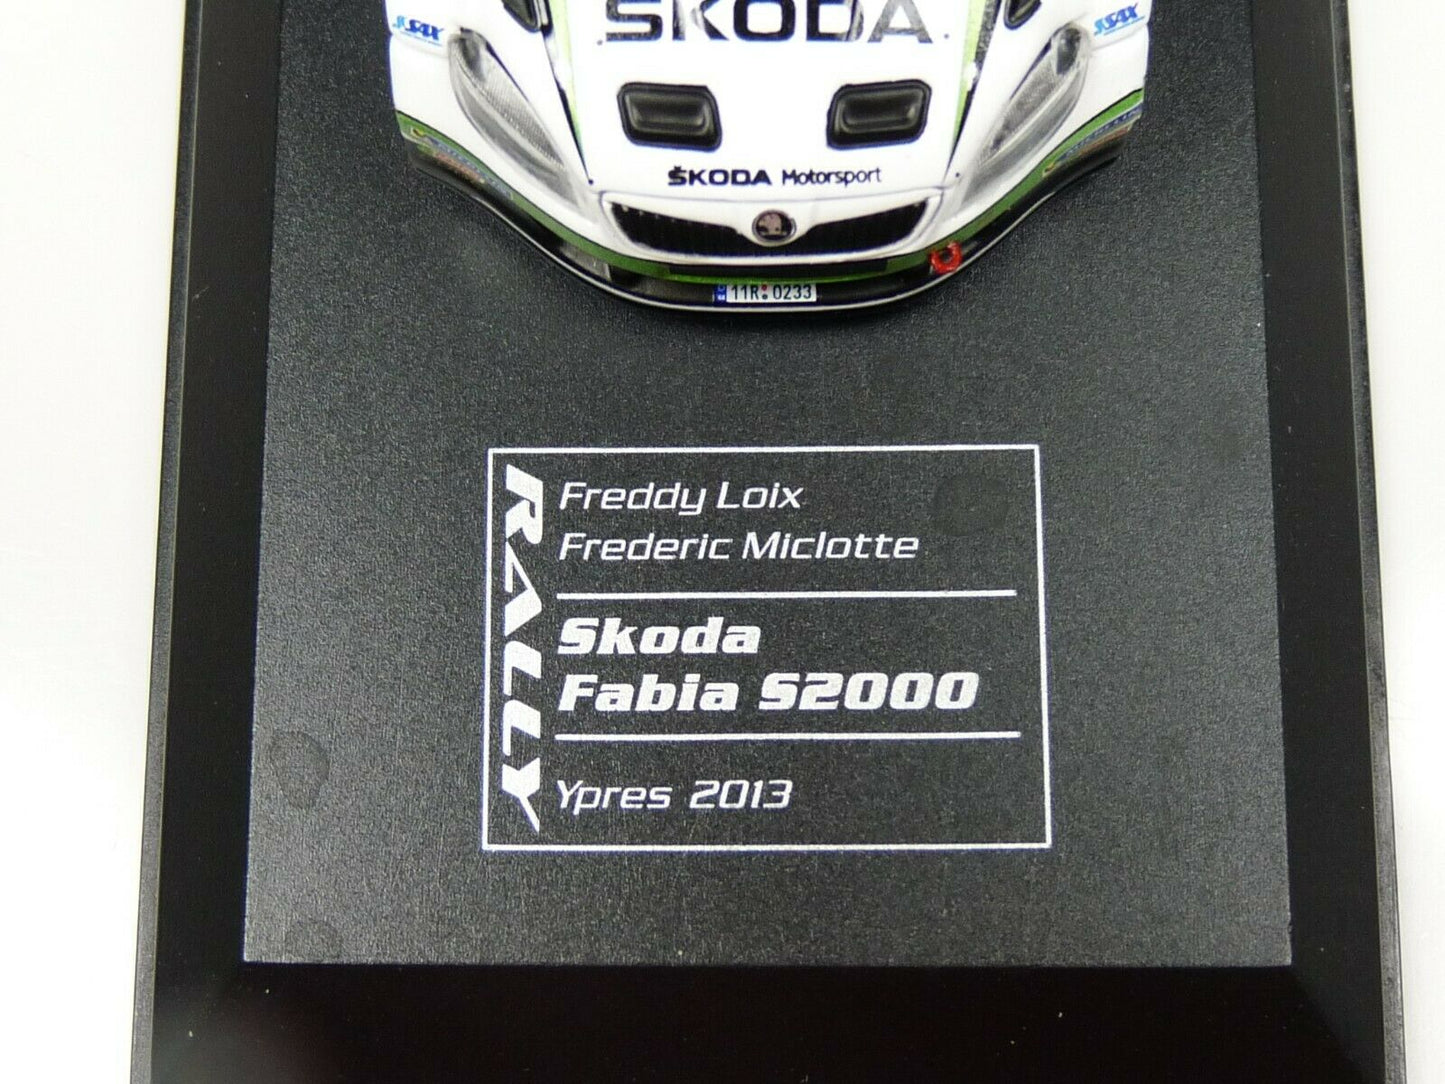 RD26 1/43 IXO Direkt Rallye SKODA FABIA S2000 Ypres 2013 F.LOIX #5